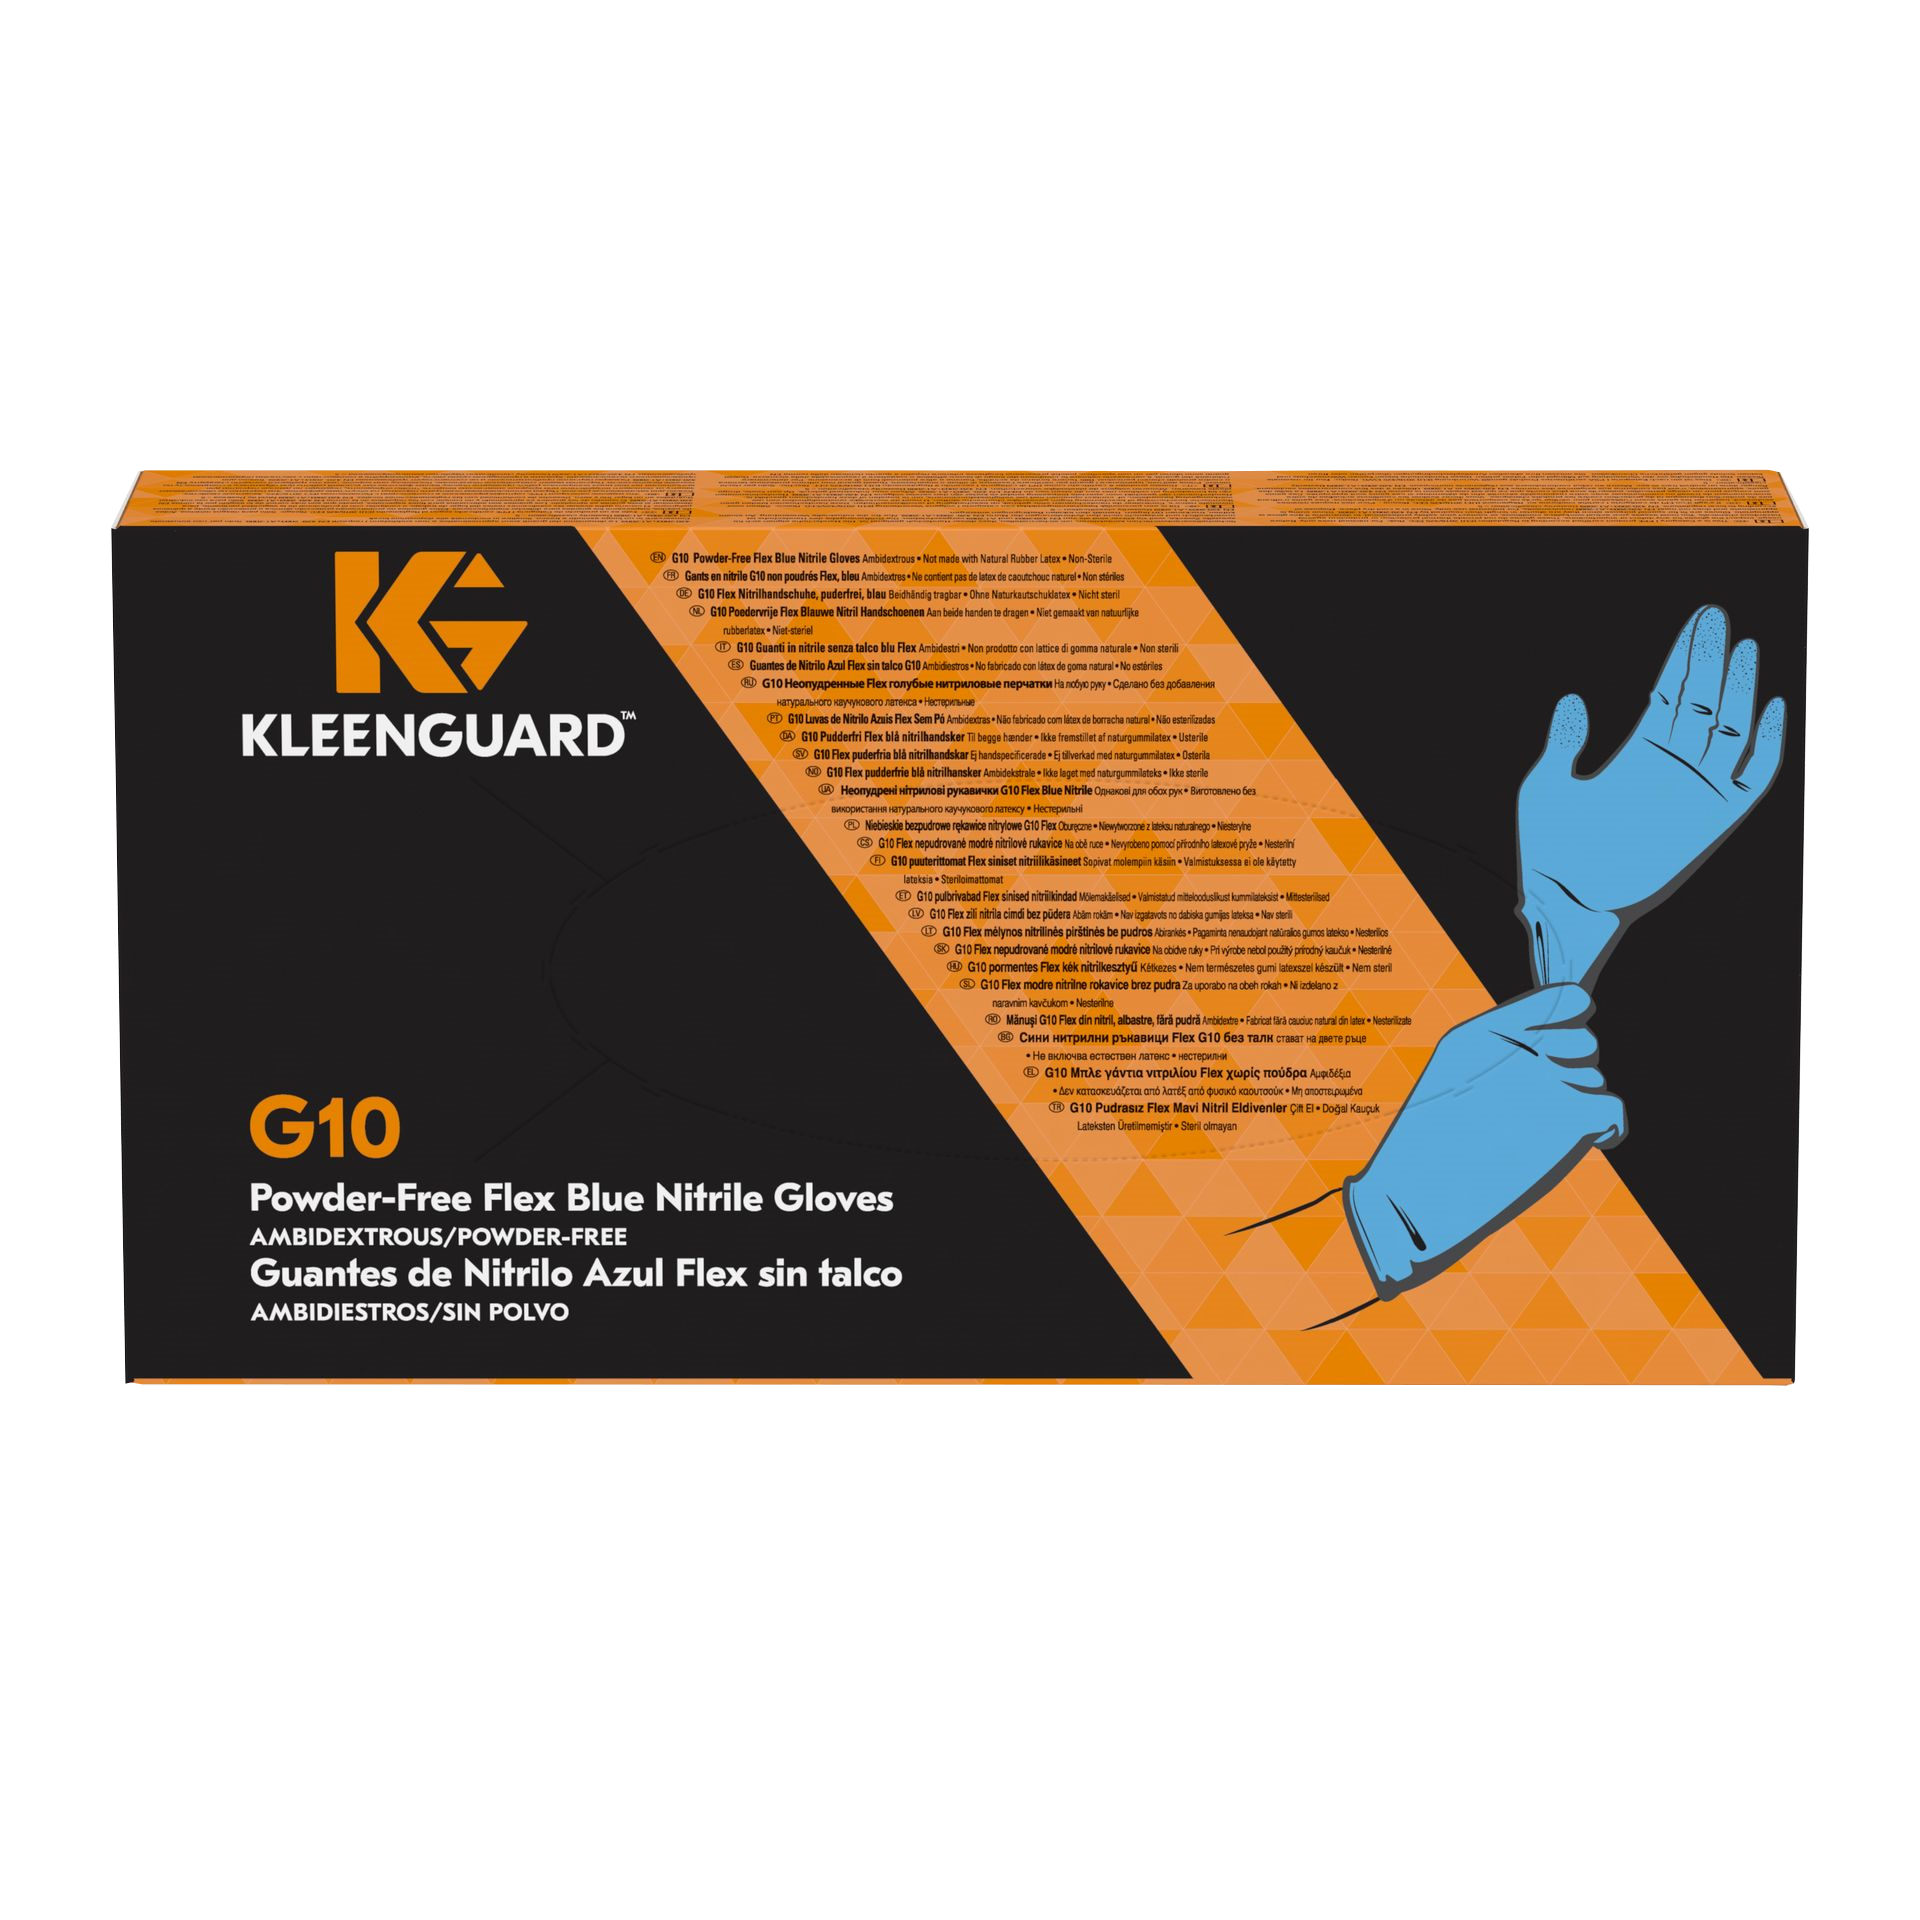 KleenGuard® Guante desechable  G10 2Pro, 30241437, Guantes de Protección, Talla M,  10 cajas x 100 guantes (1000 en total) - S060713729